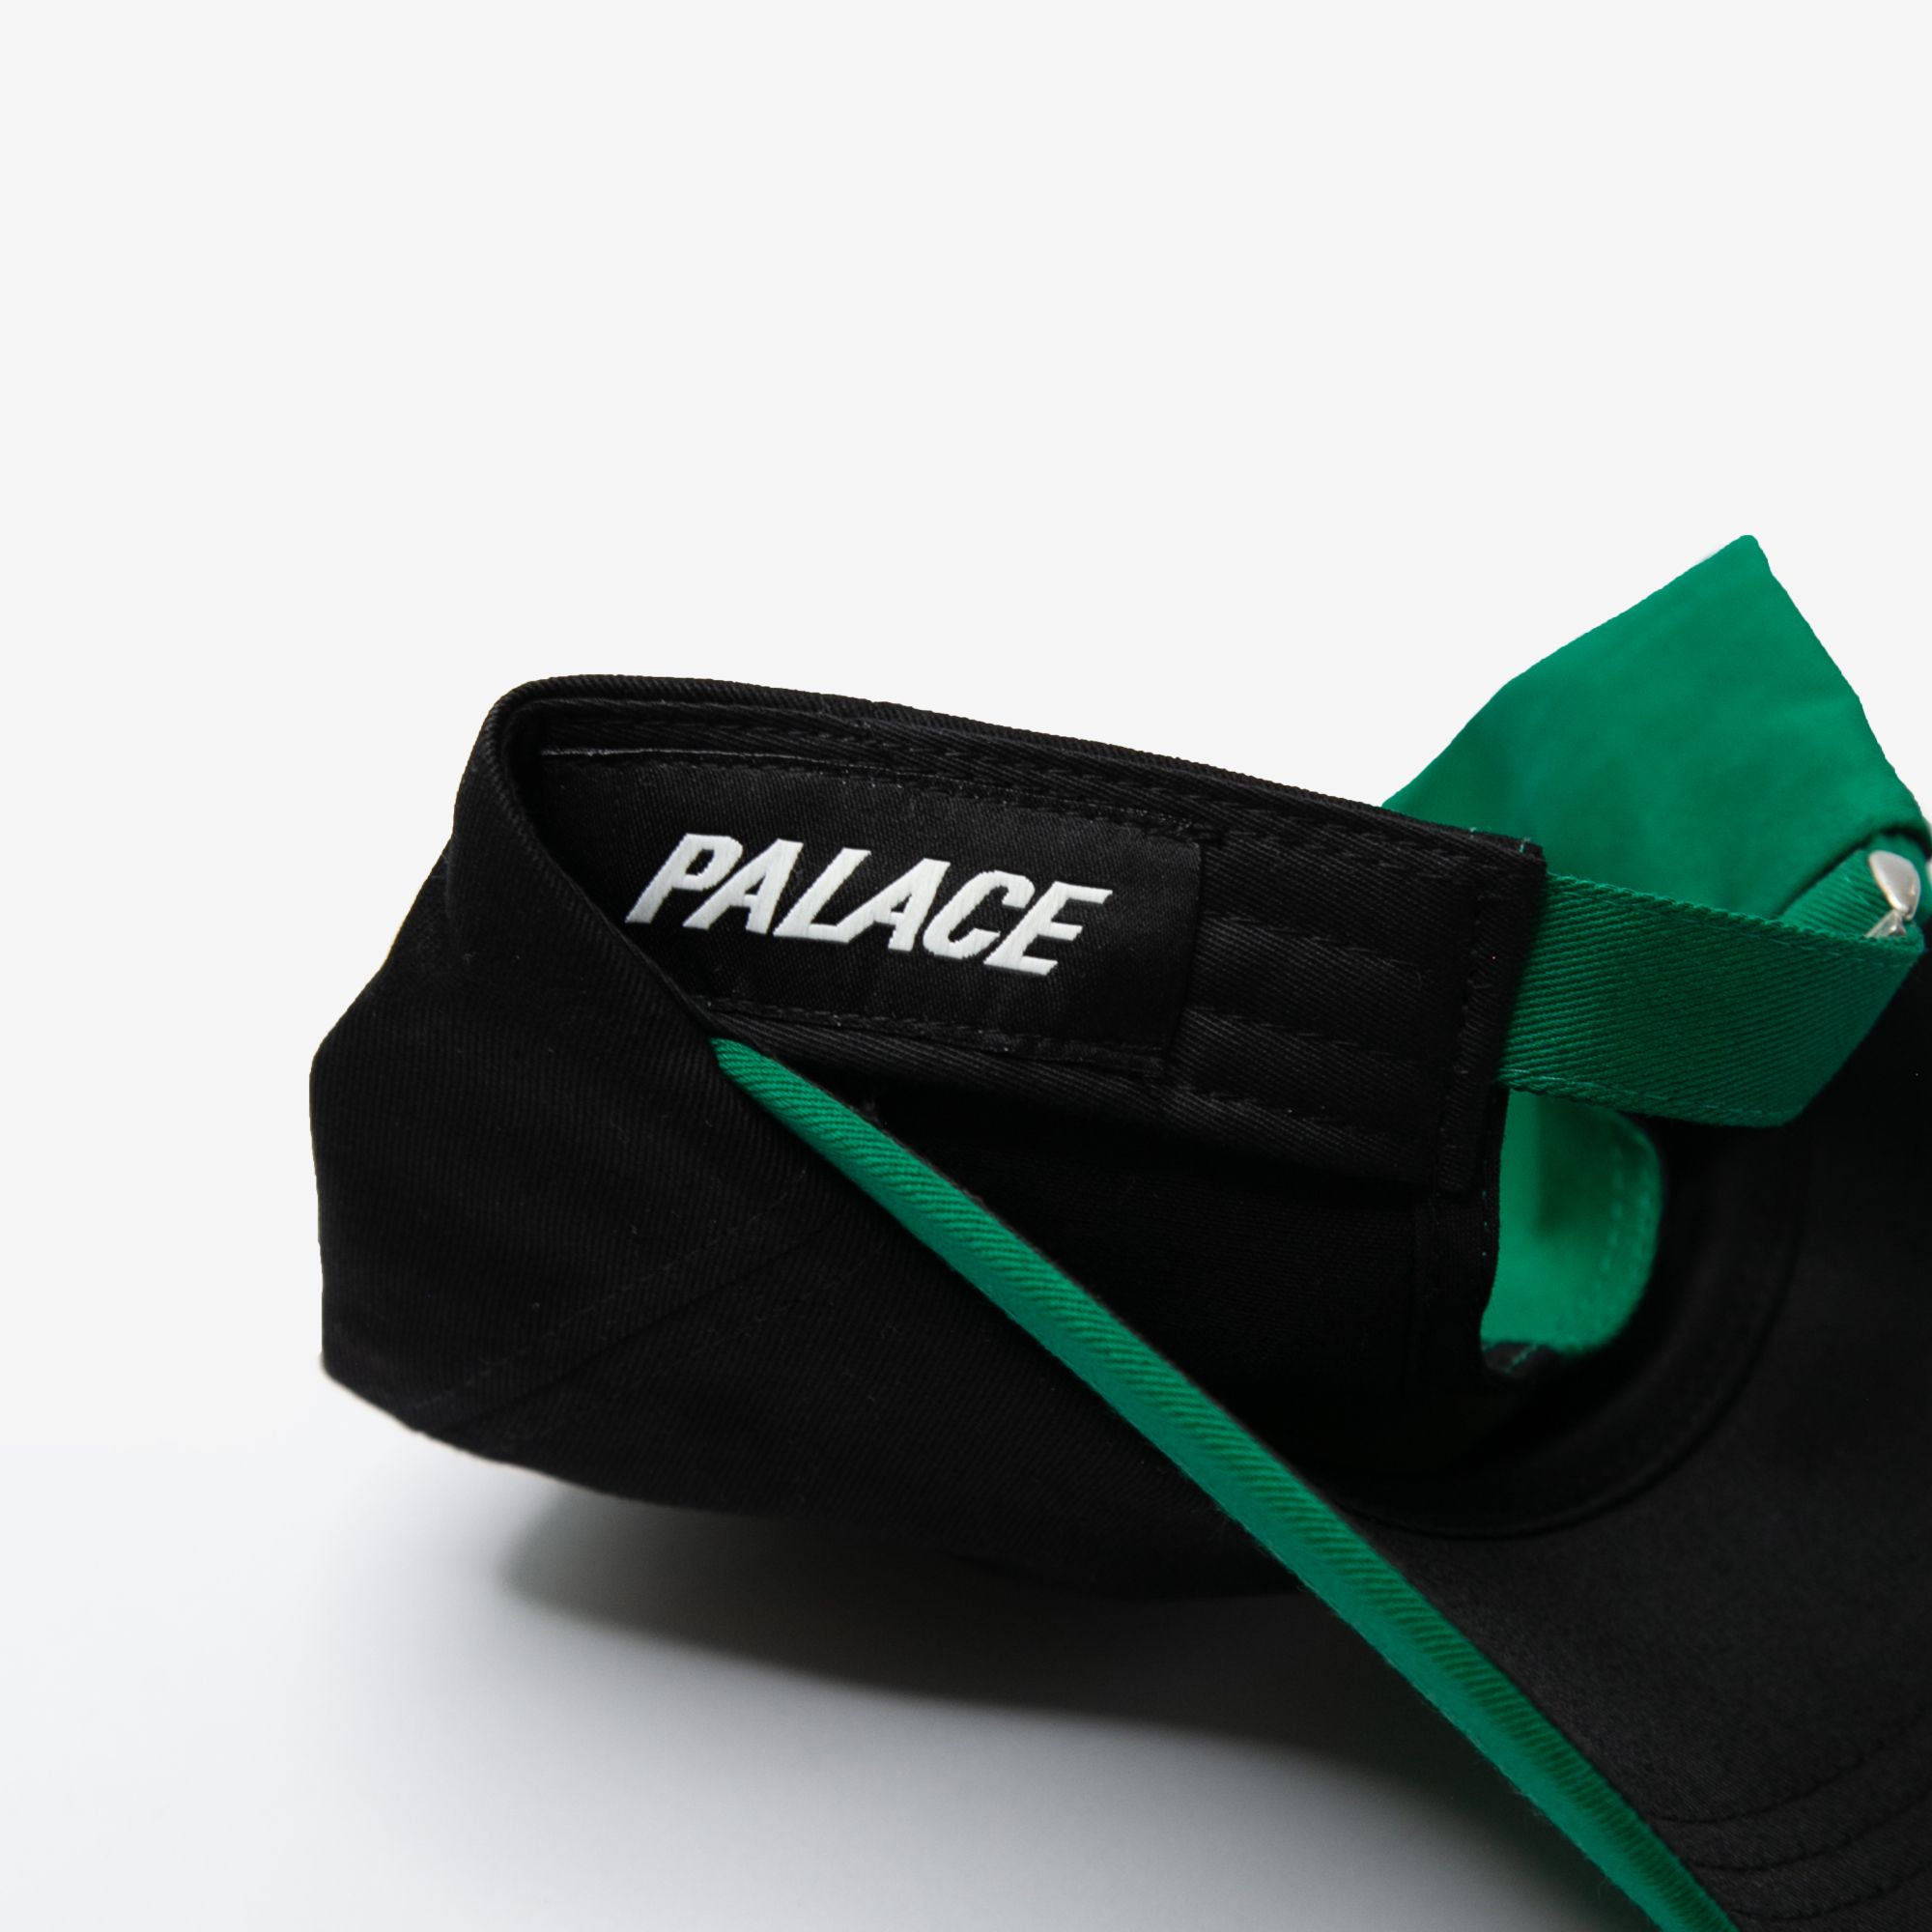  Palace Basically A Split 6-Panel Hat - Green/Black 